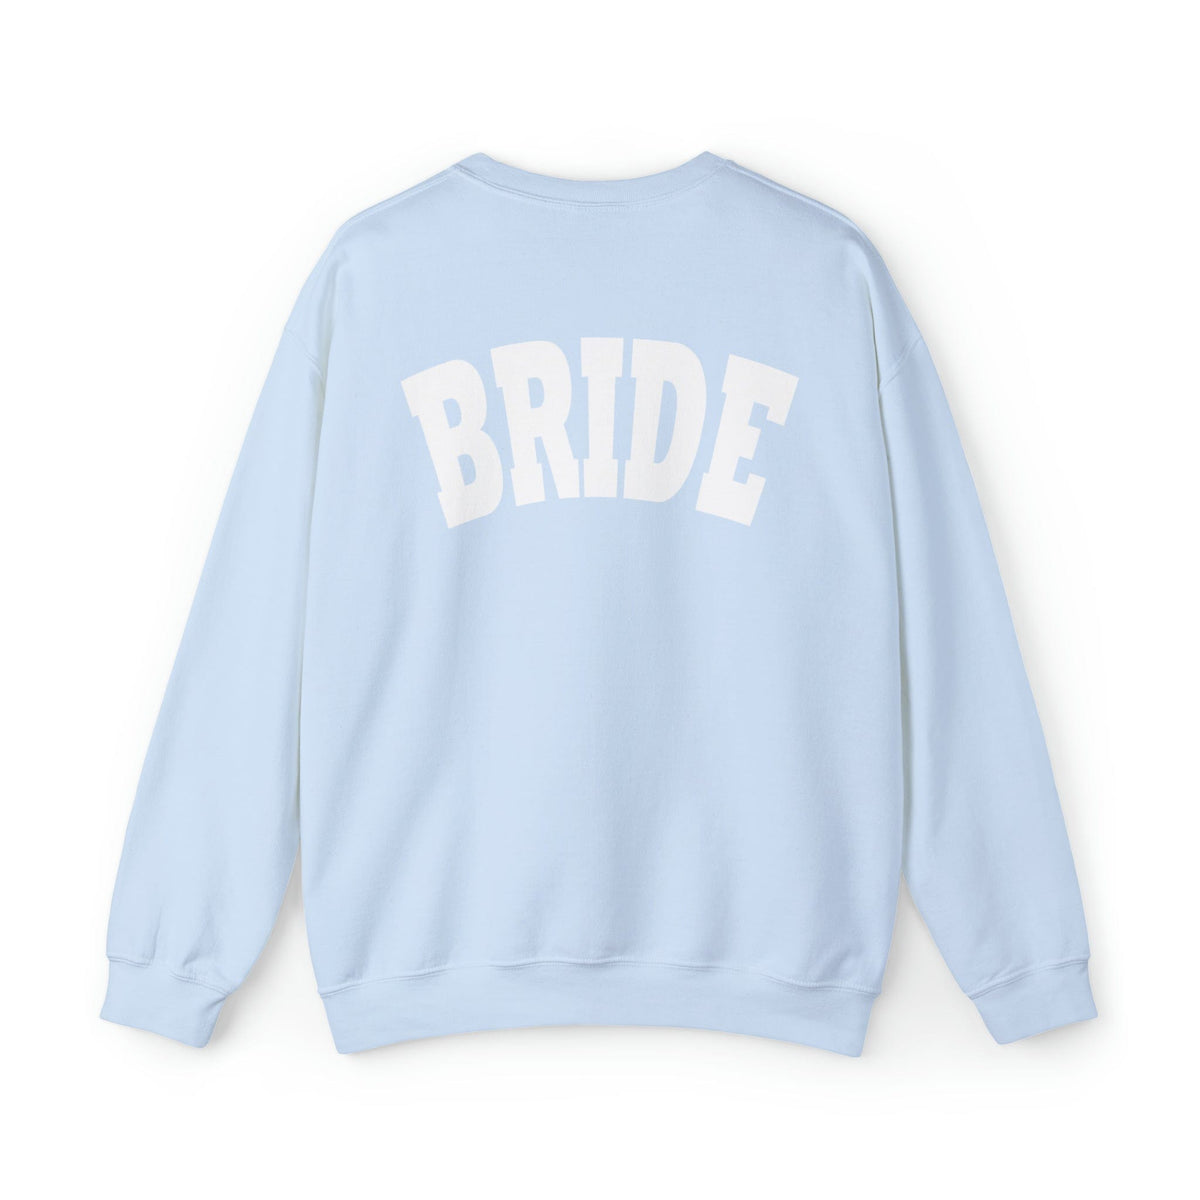 Bride Jersey Style Crewneck Bridal Sweatshirt Sweatshirt TheFringeCultureCollective